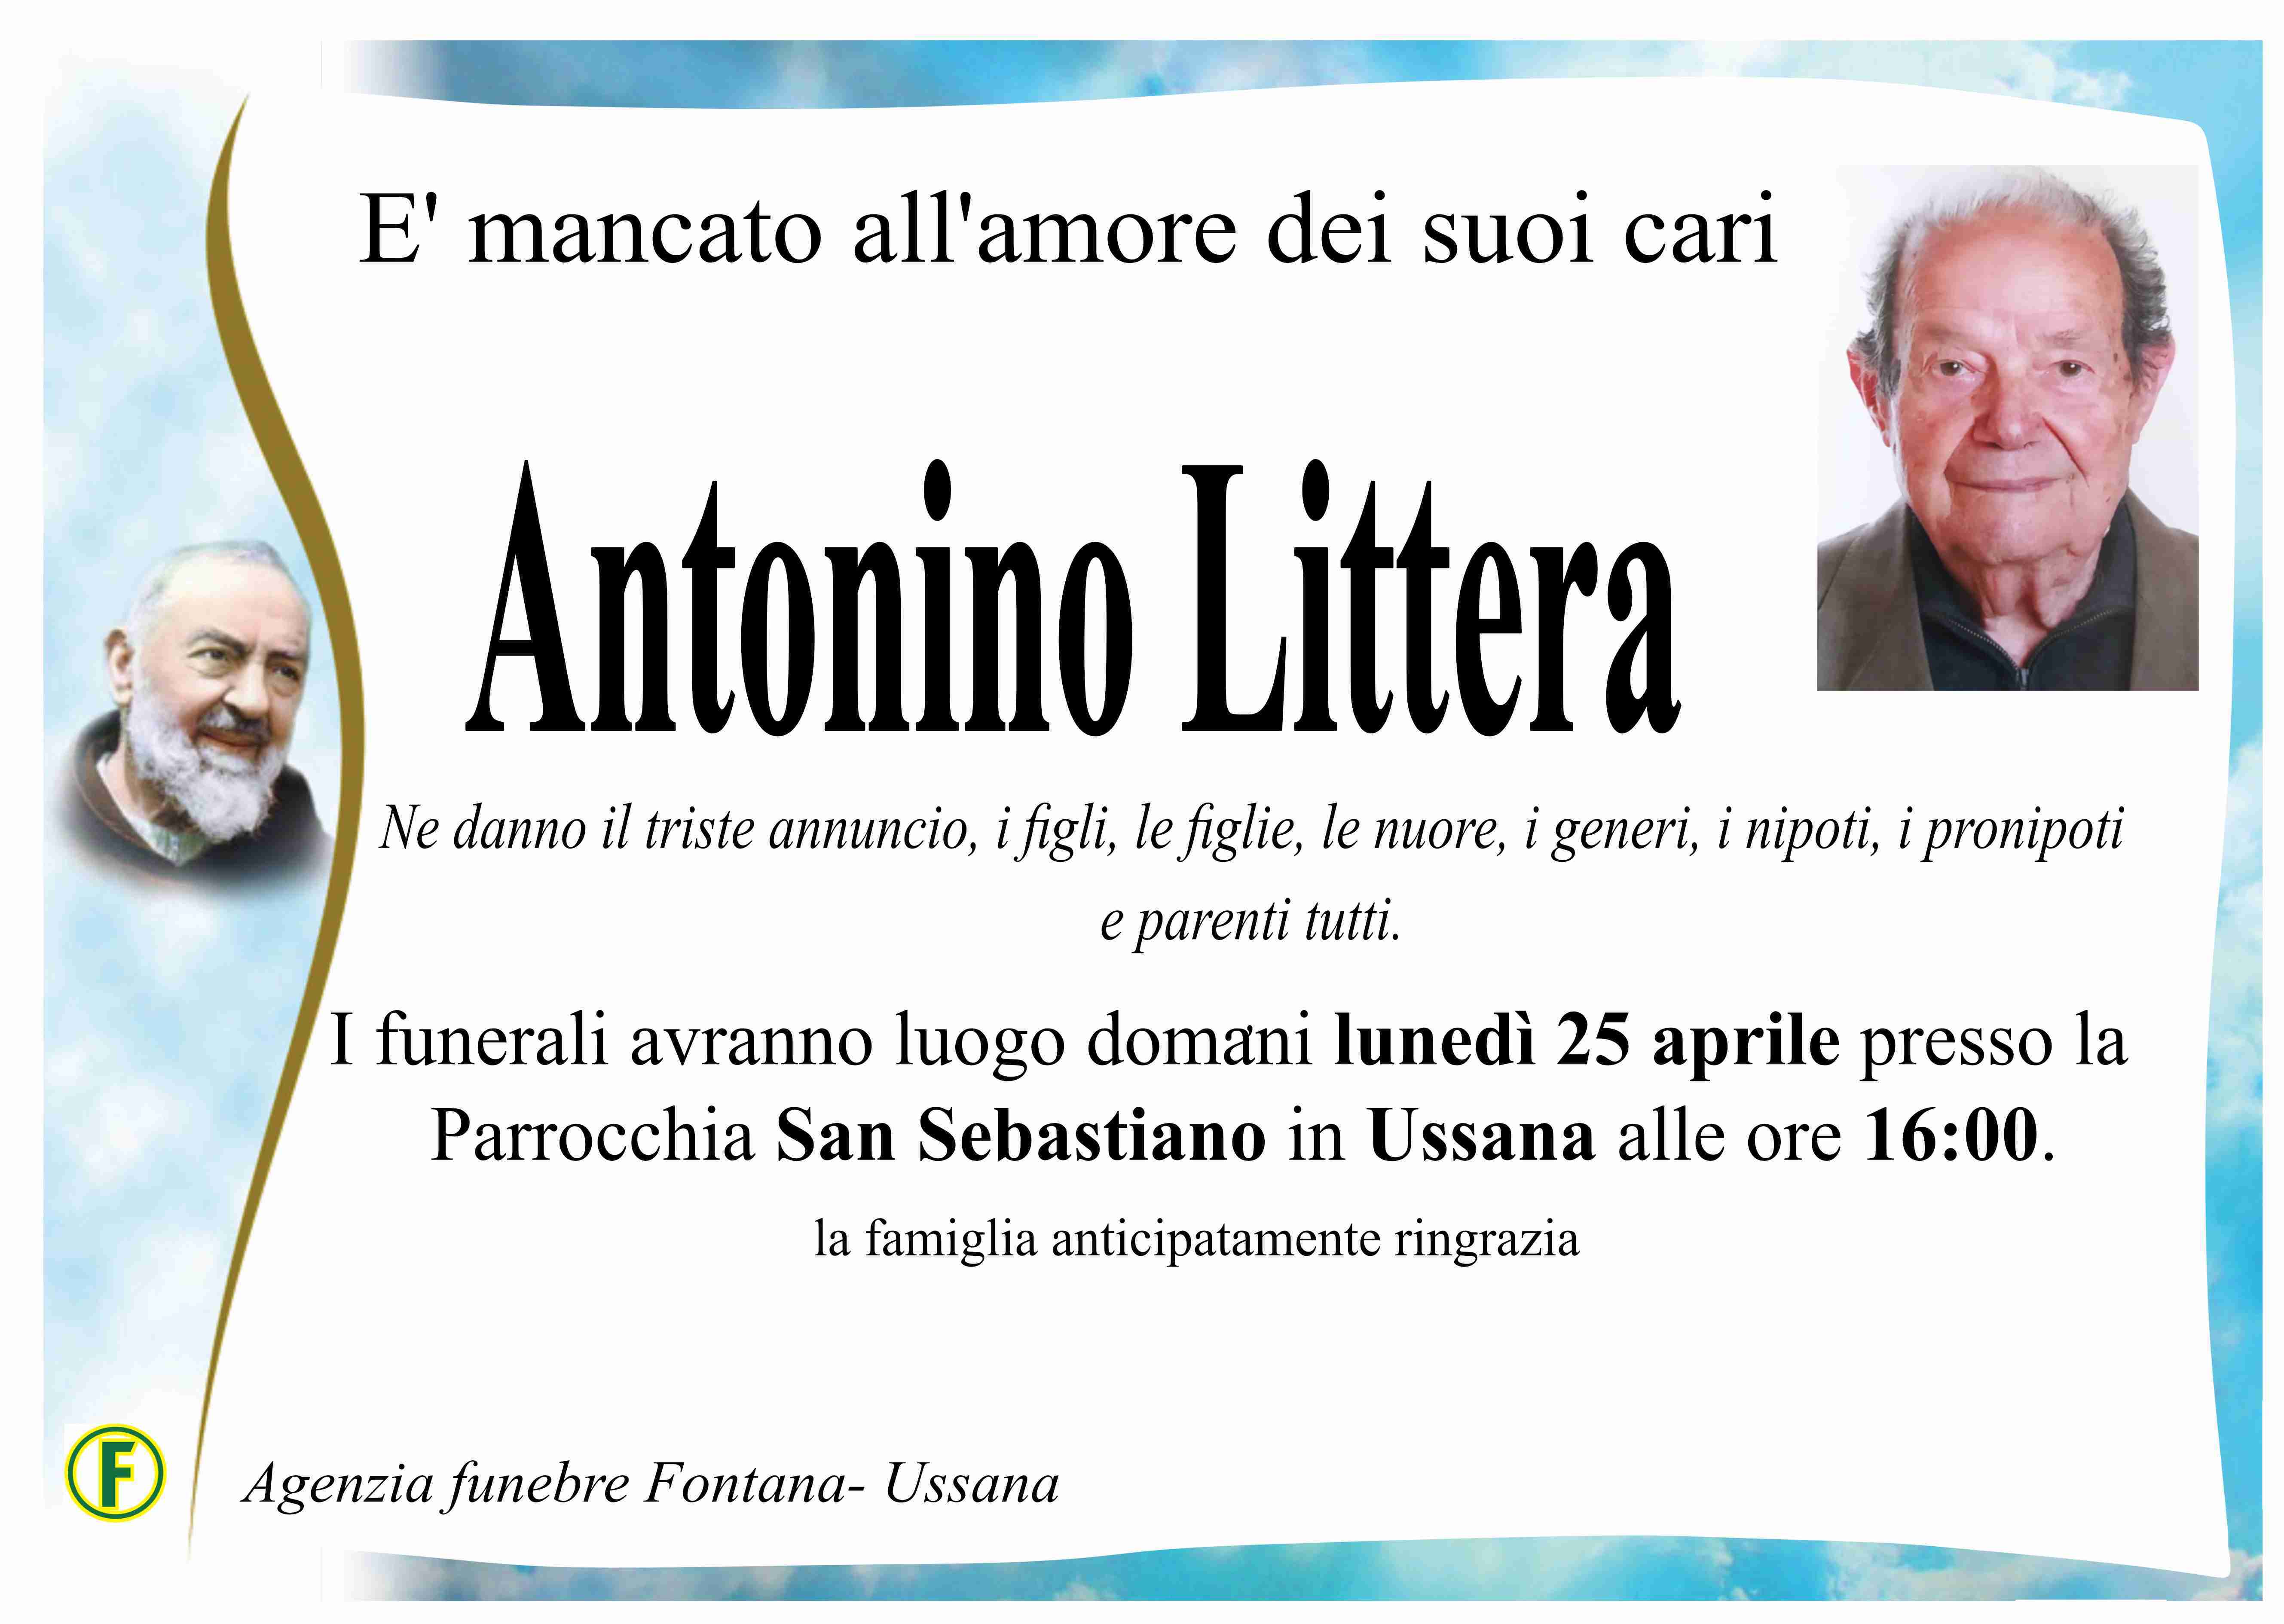 Antonino Littera